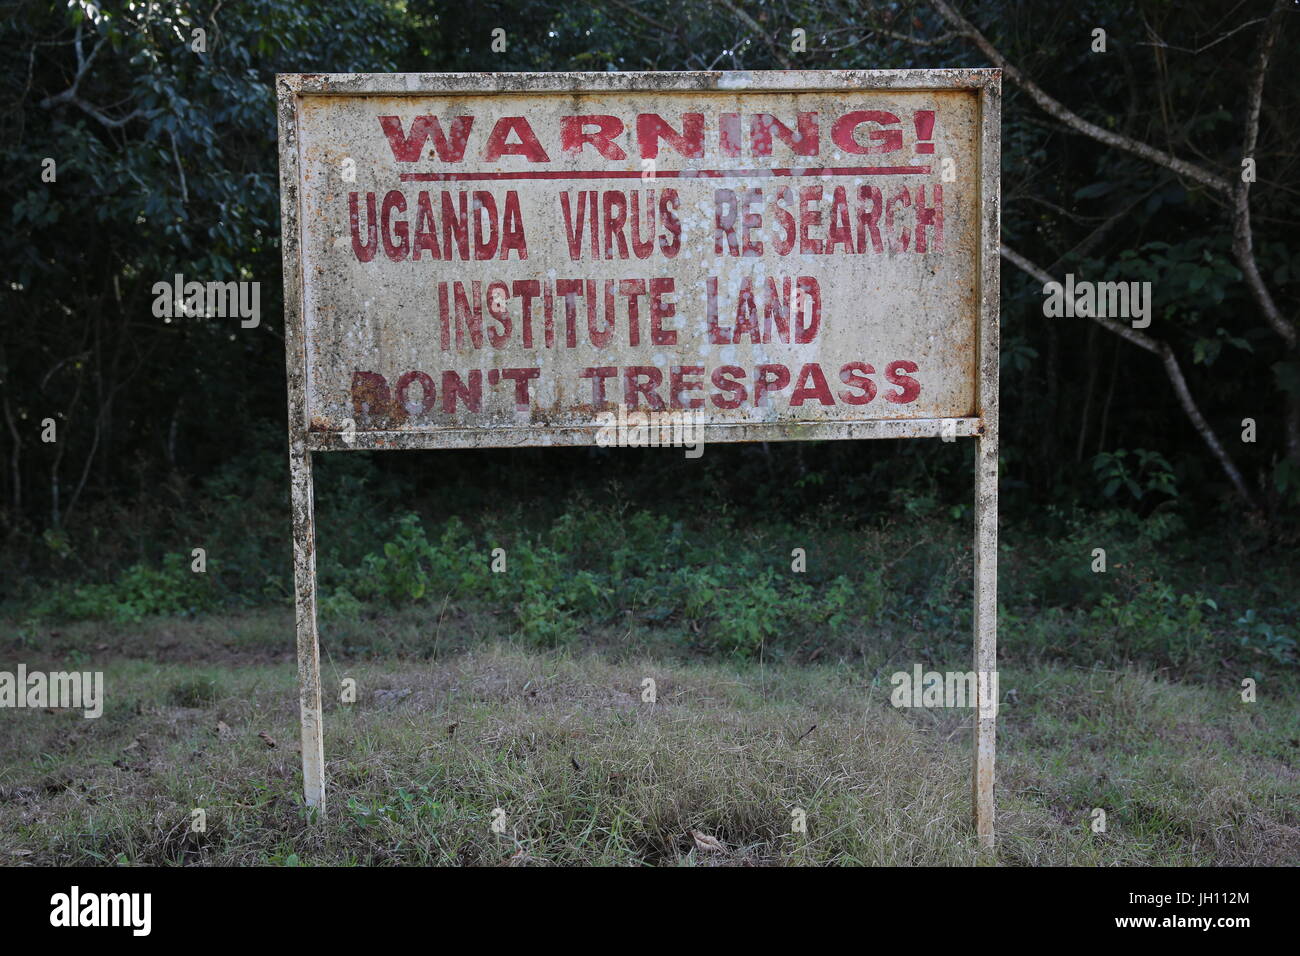 Uganda virus research institure sign in Zika forest, de l'Ouganda. L'Ouganda. Banque D'Images